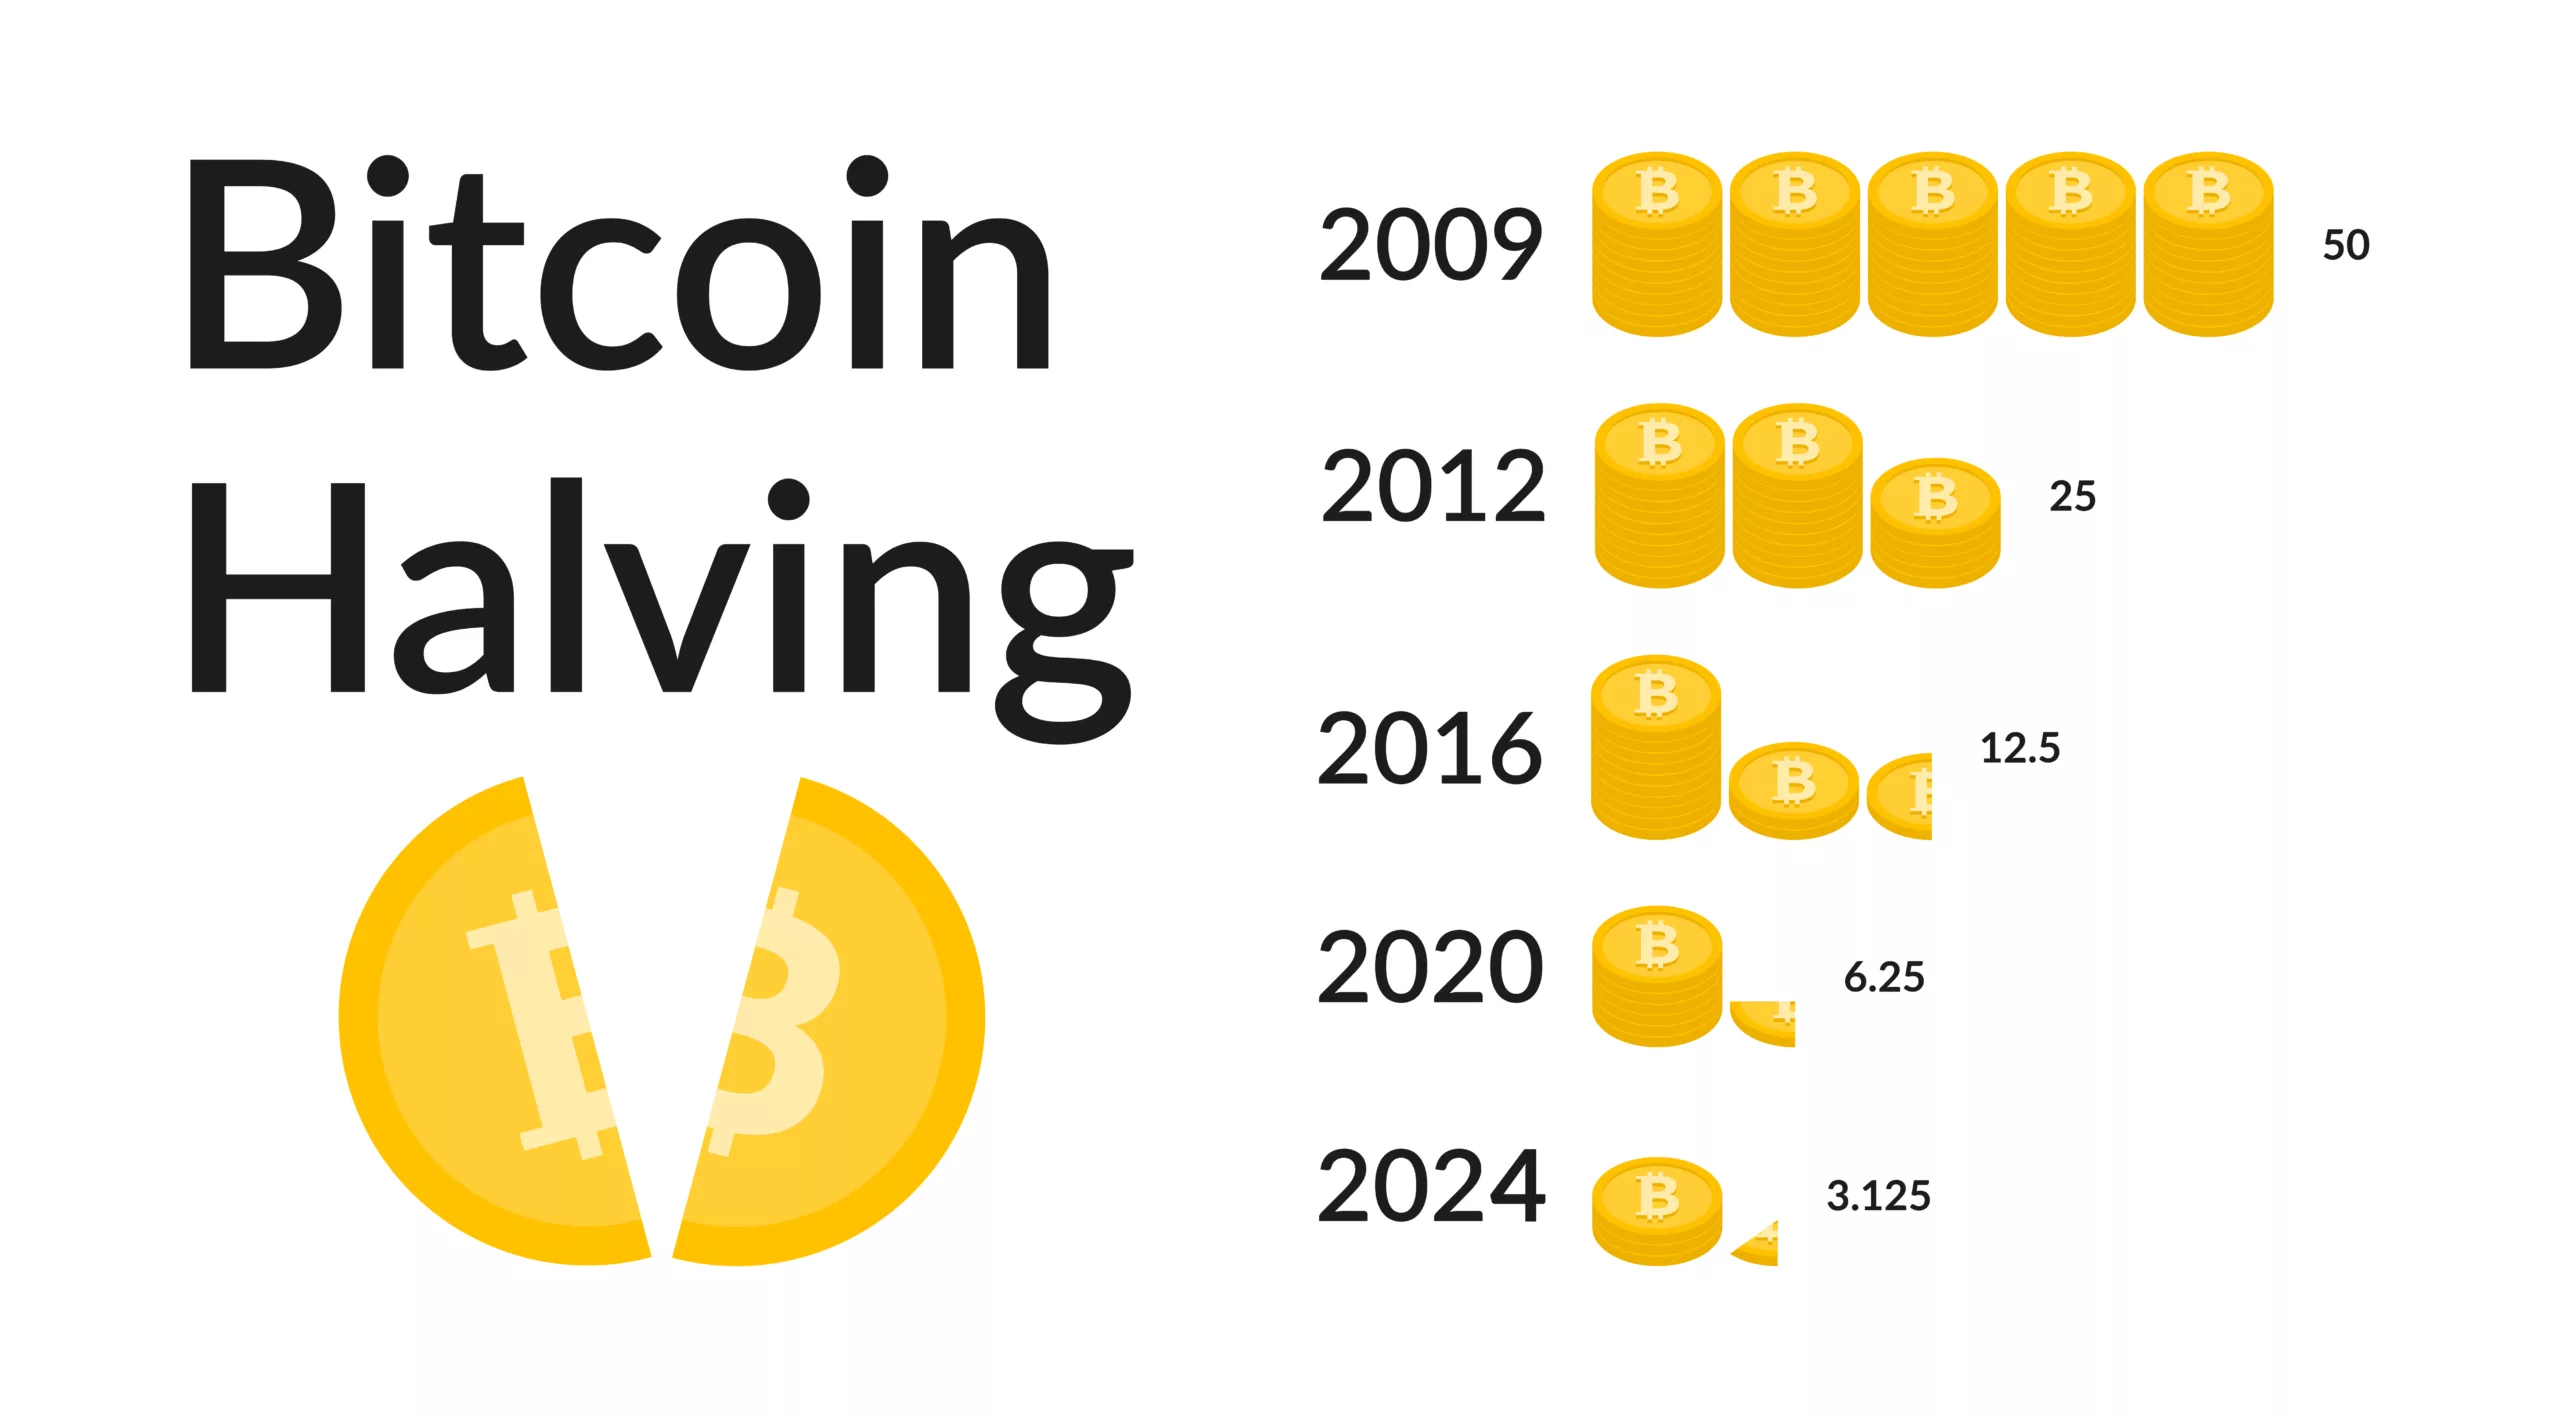 Bitcoin Halving timeline